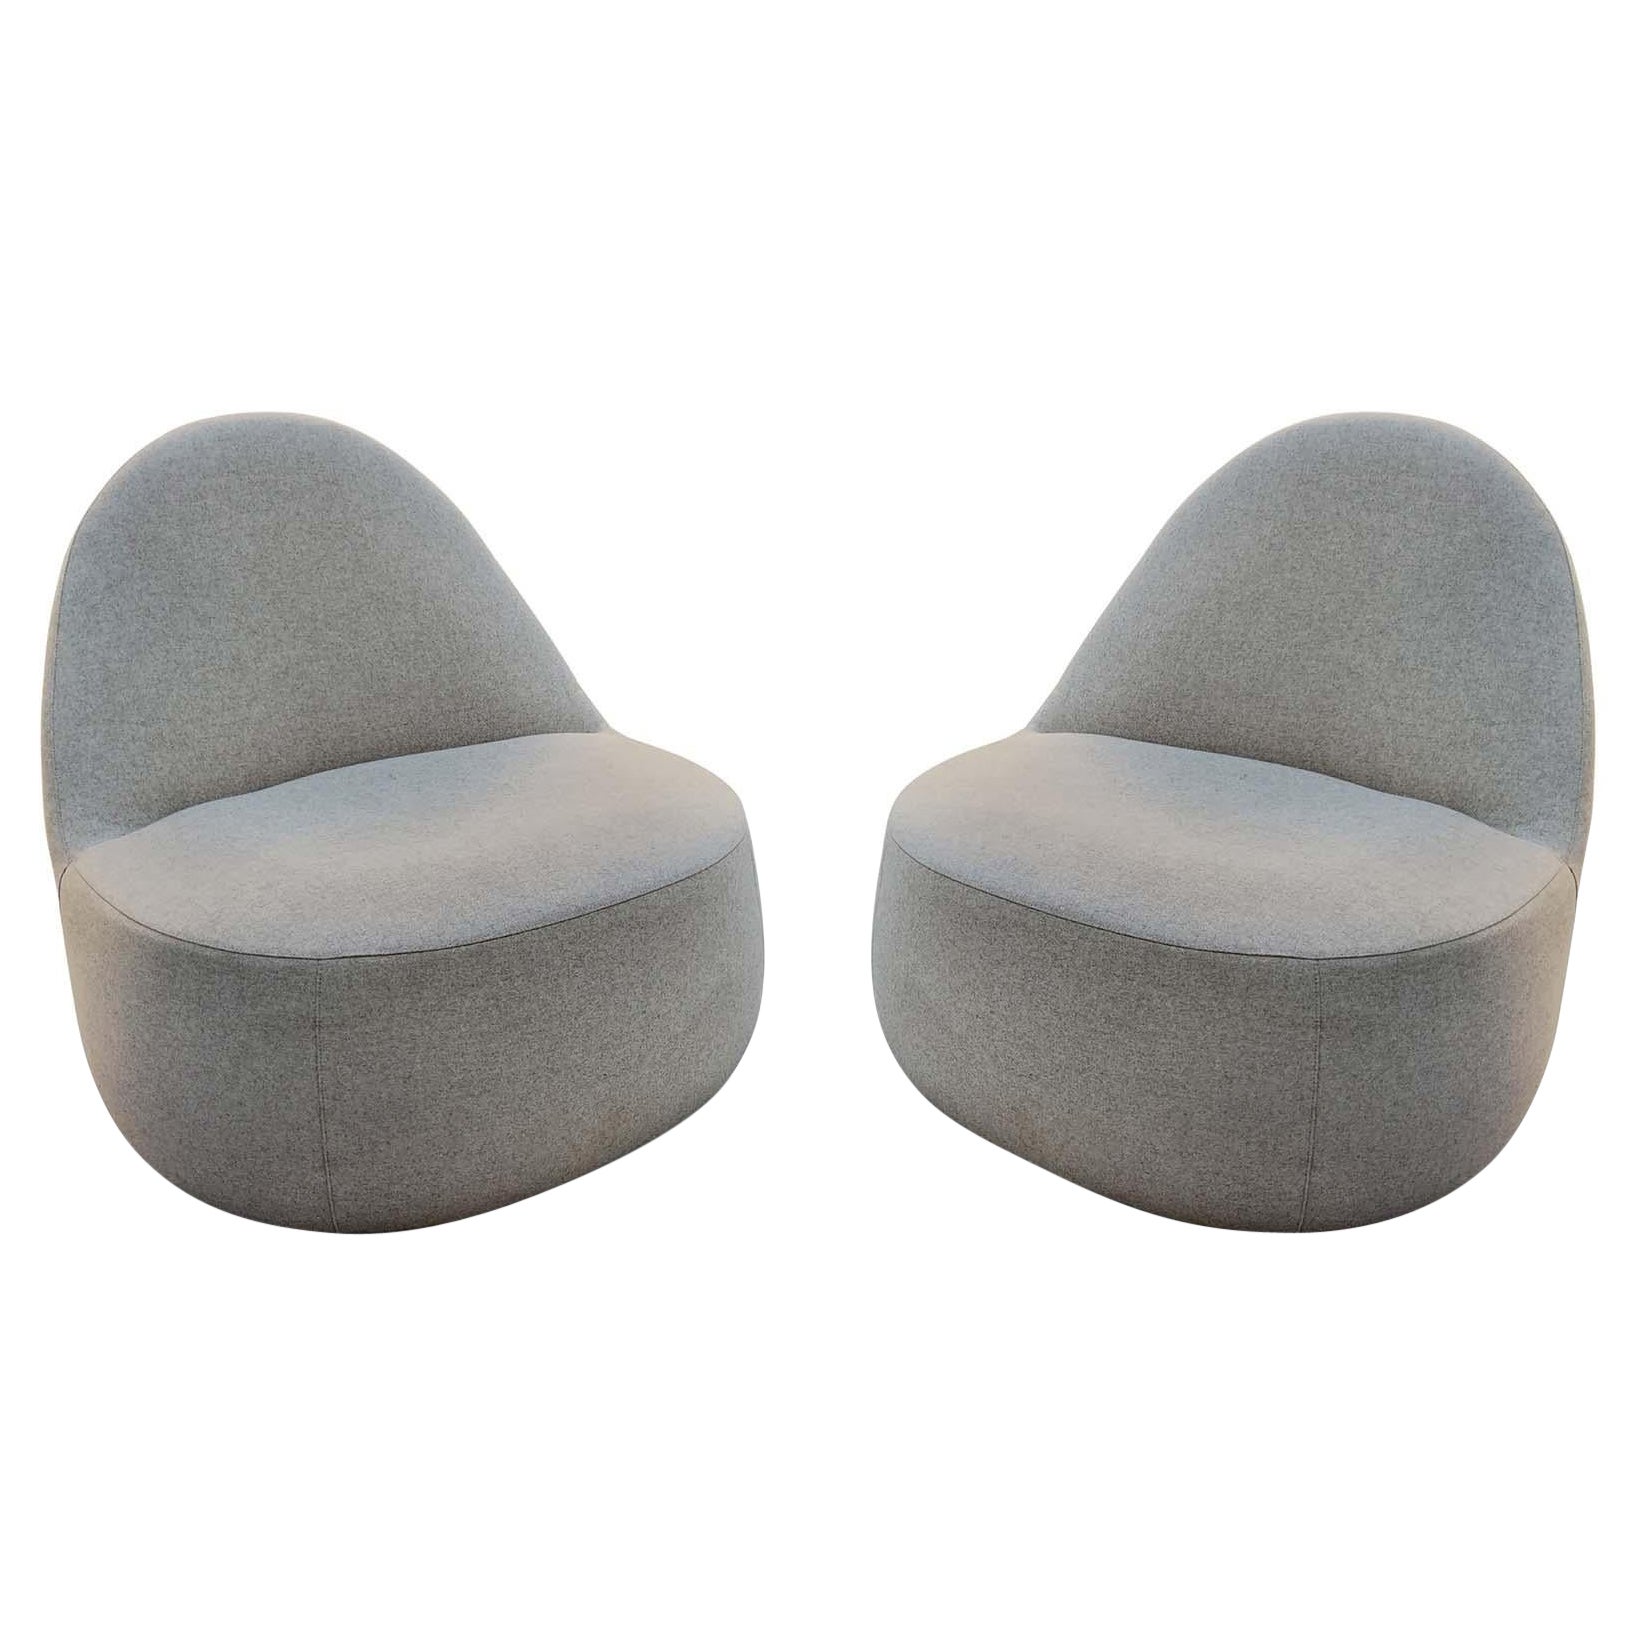 Mitt Lounge Chairs Pair, Claudia + Harry Washington, Bernhardt Design Space-Age